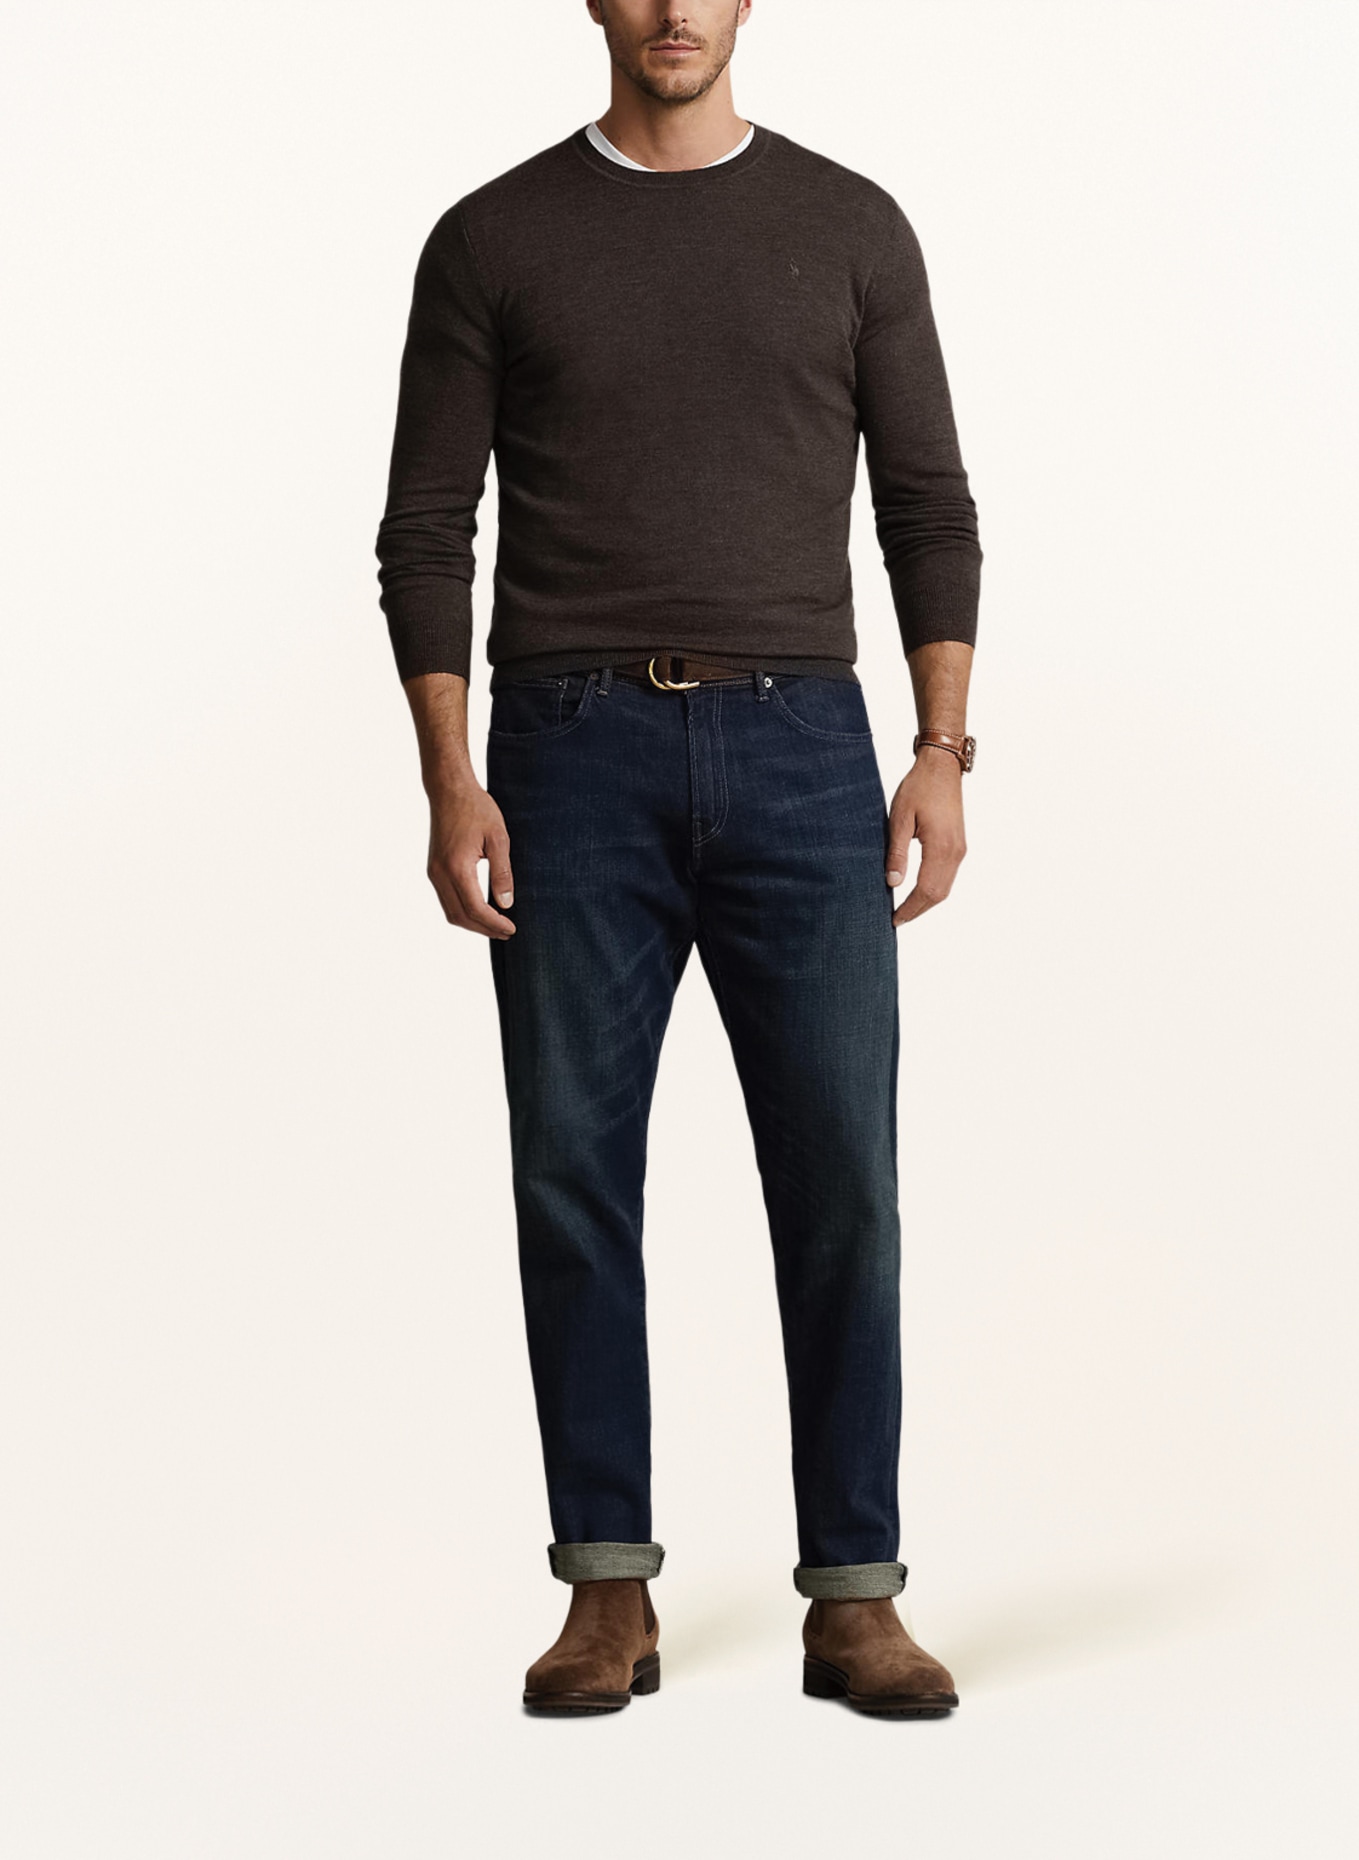 POLO RALPH LAUREN Big & Tall Sweater, Color: DARK BROWN (Image 2)